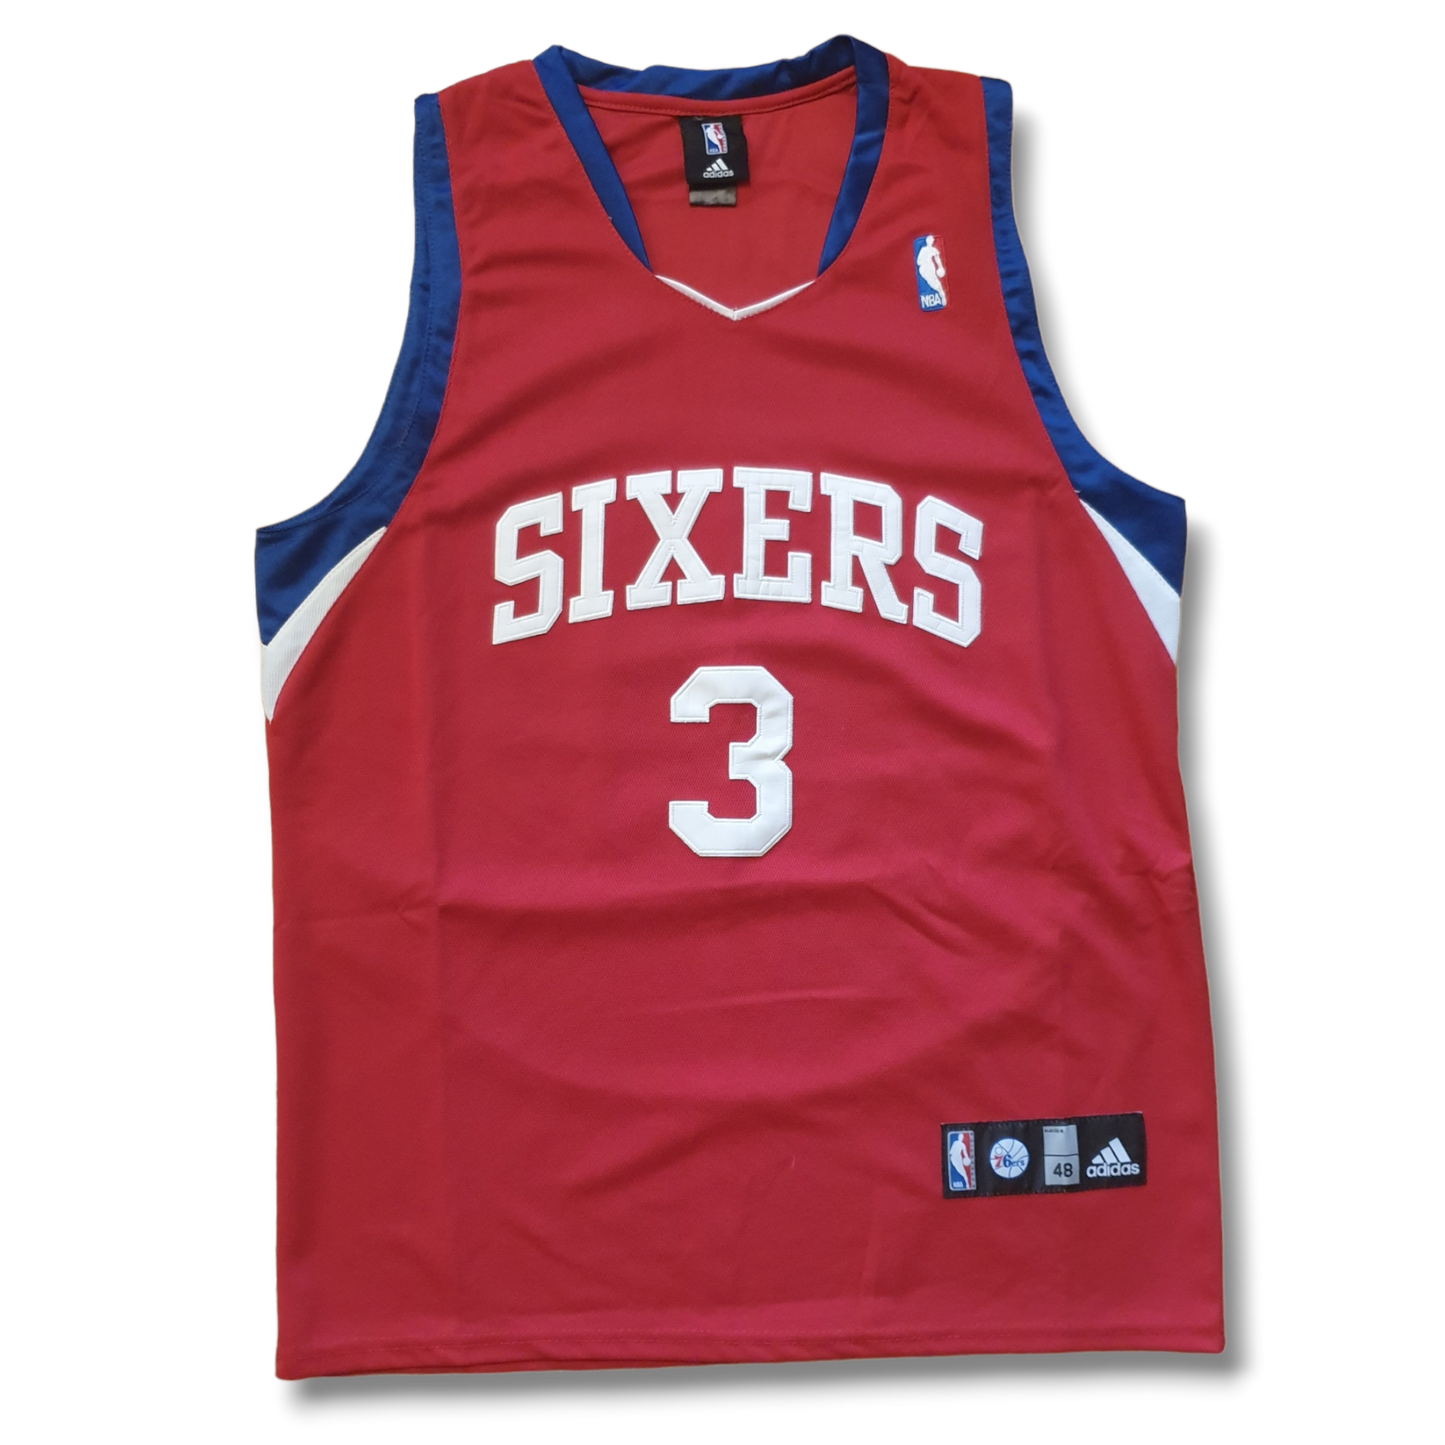 SIXERS Basketball Jersey XL